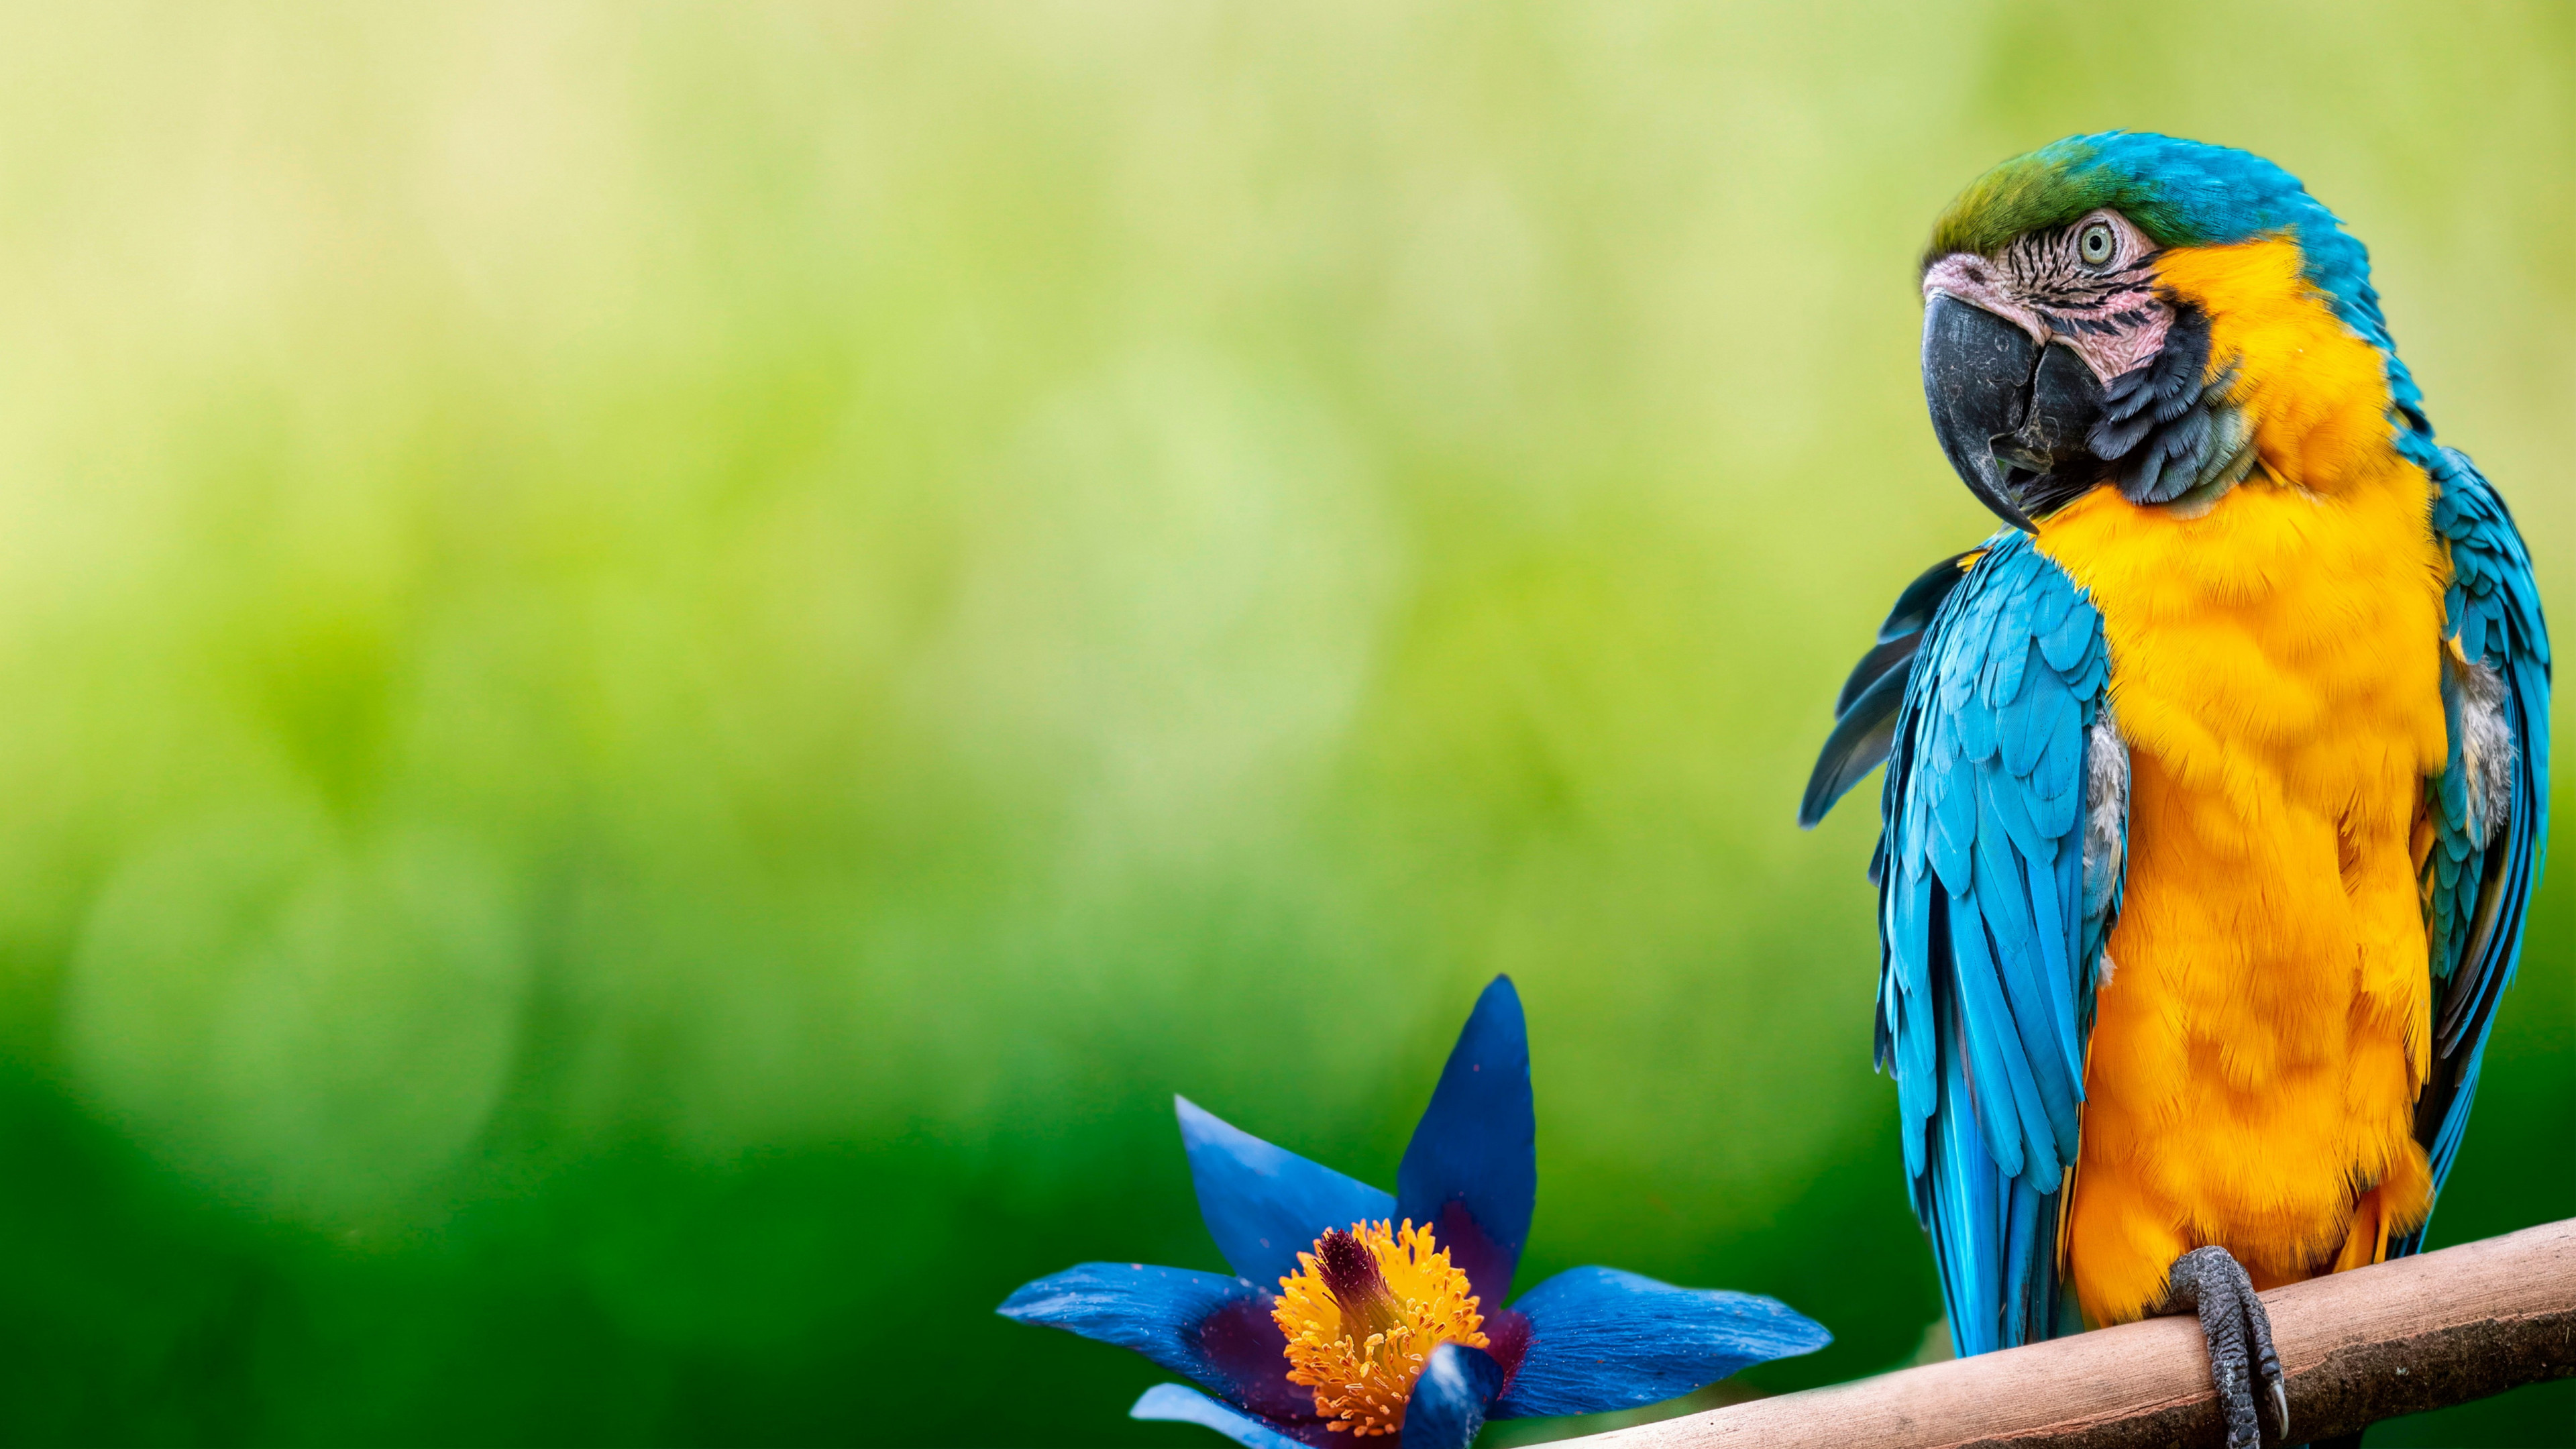 Download Wallpaper Beautiful Macaw Parrot 3840x2160